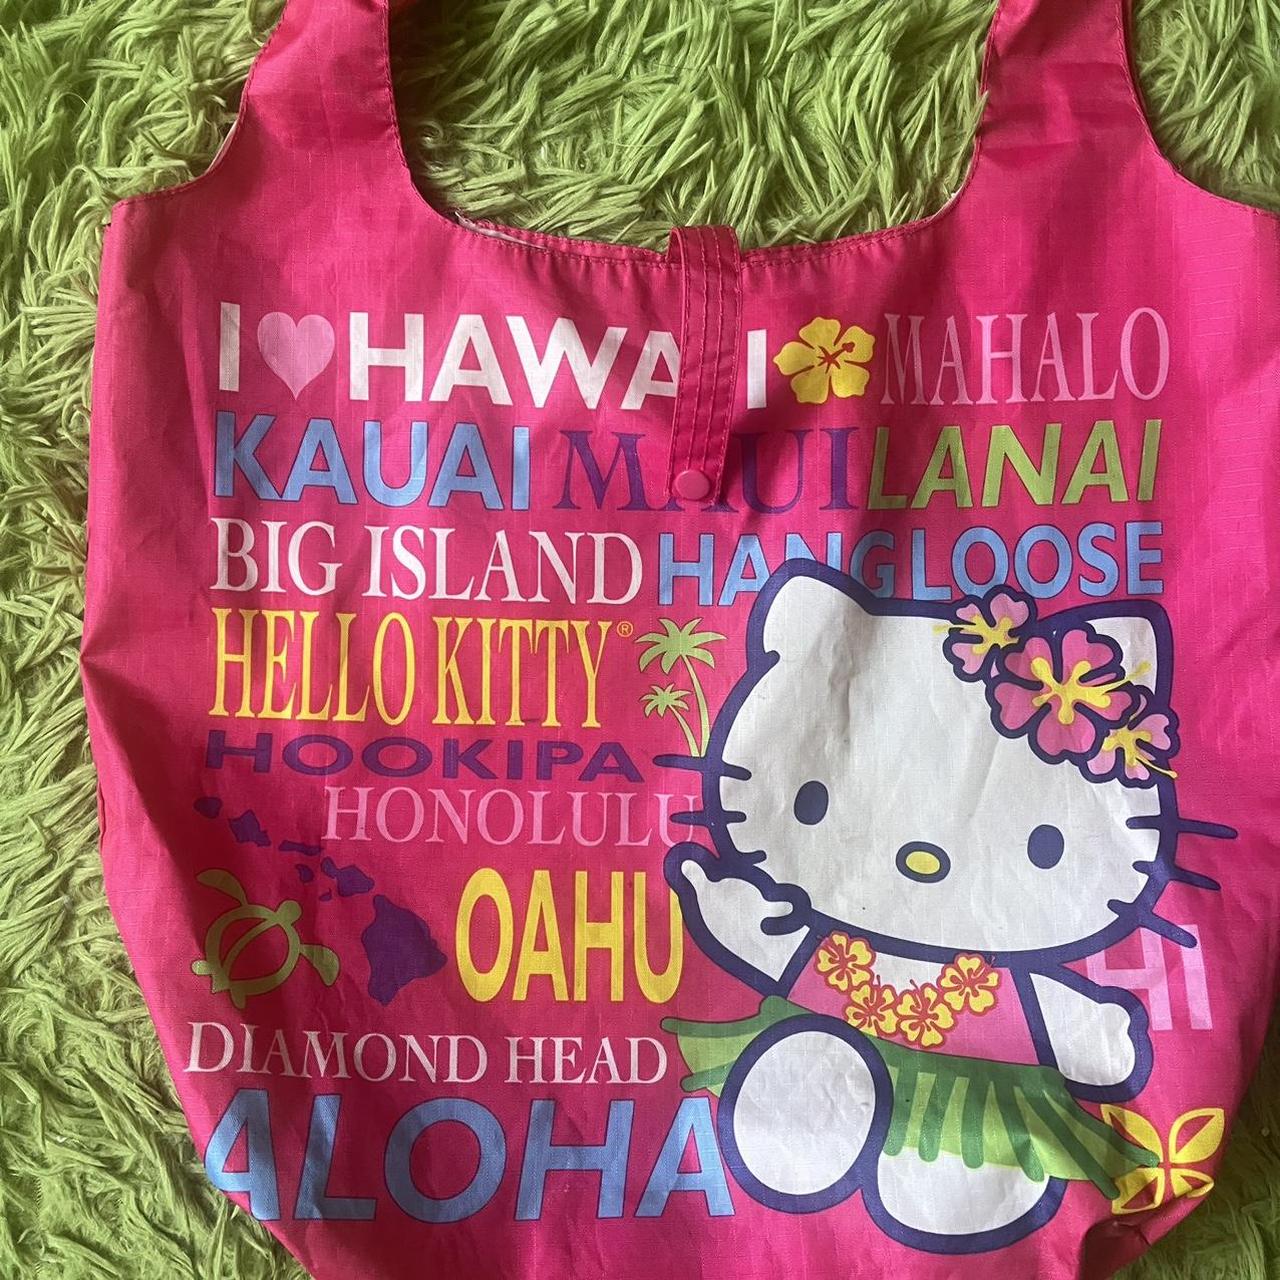 Cute Hawaiian y2k tote bag with blue striped - Depop